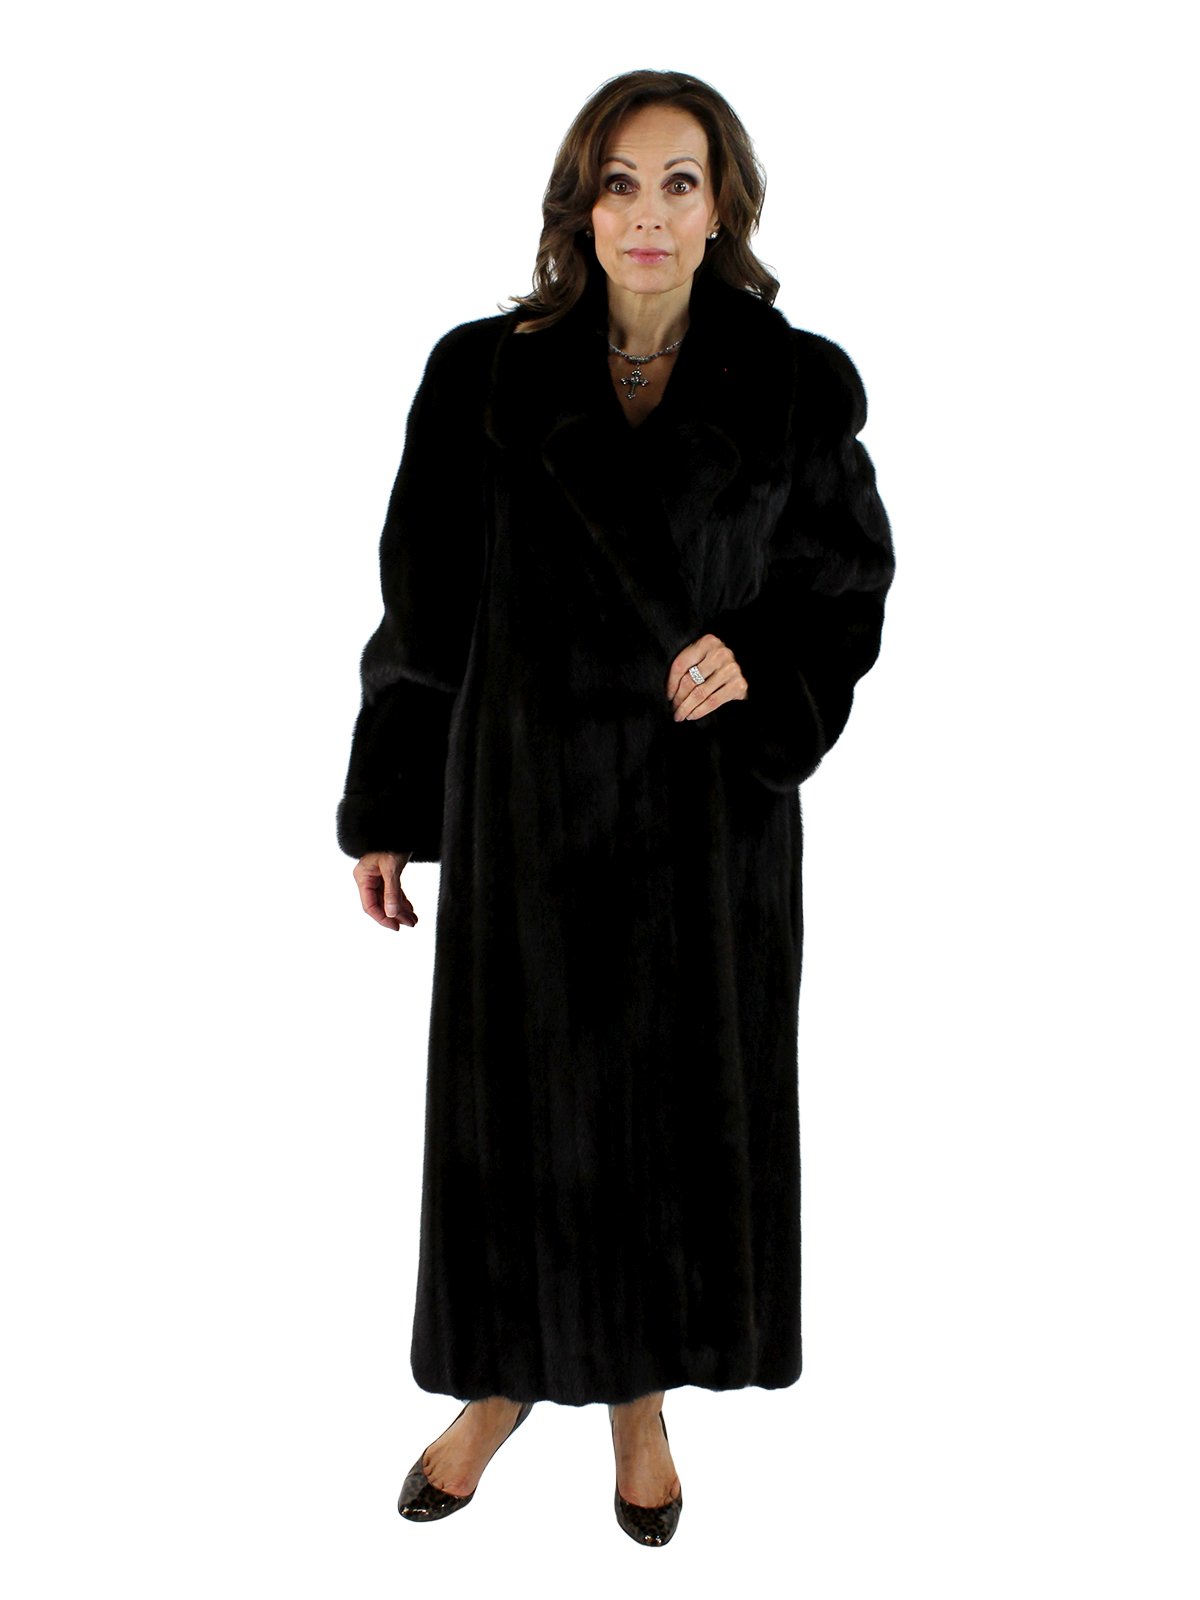 Whiskey Female Mink Fur Coat - Women's Mink Coat - Large| Estate Furs